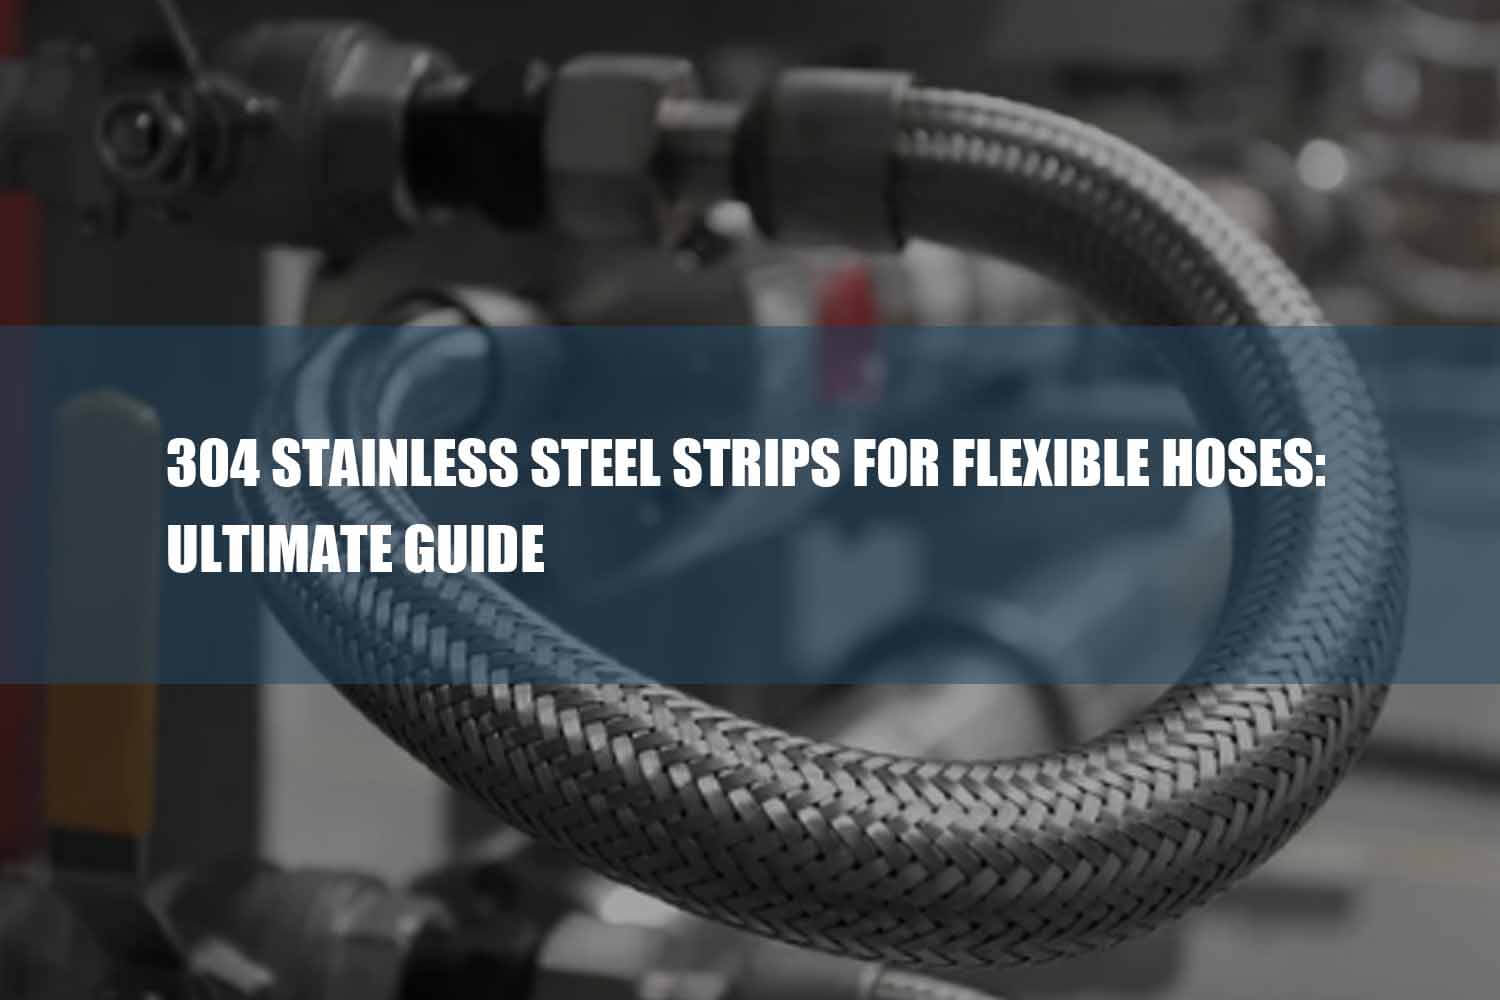 304 stainless steel strips for flexible hoses